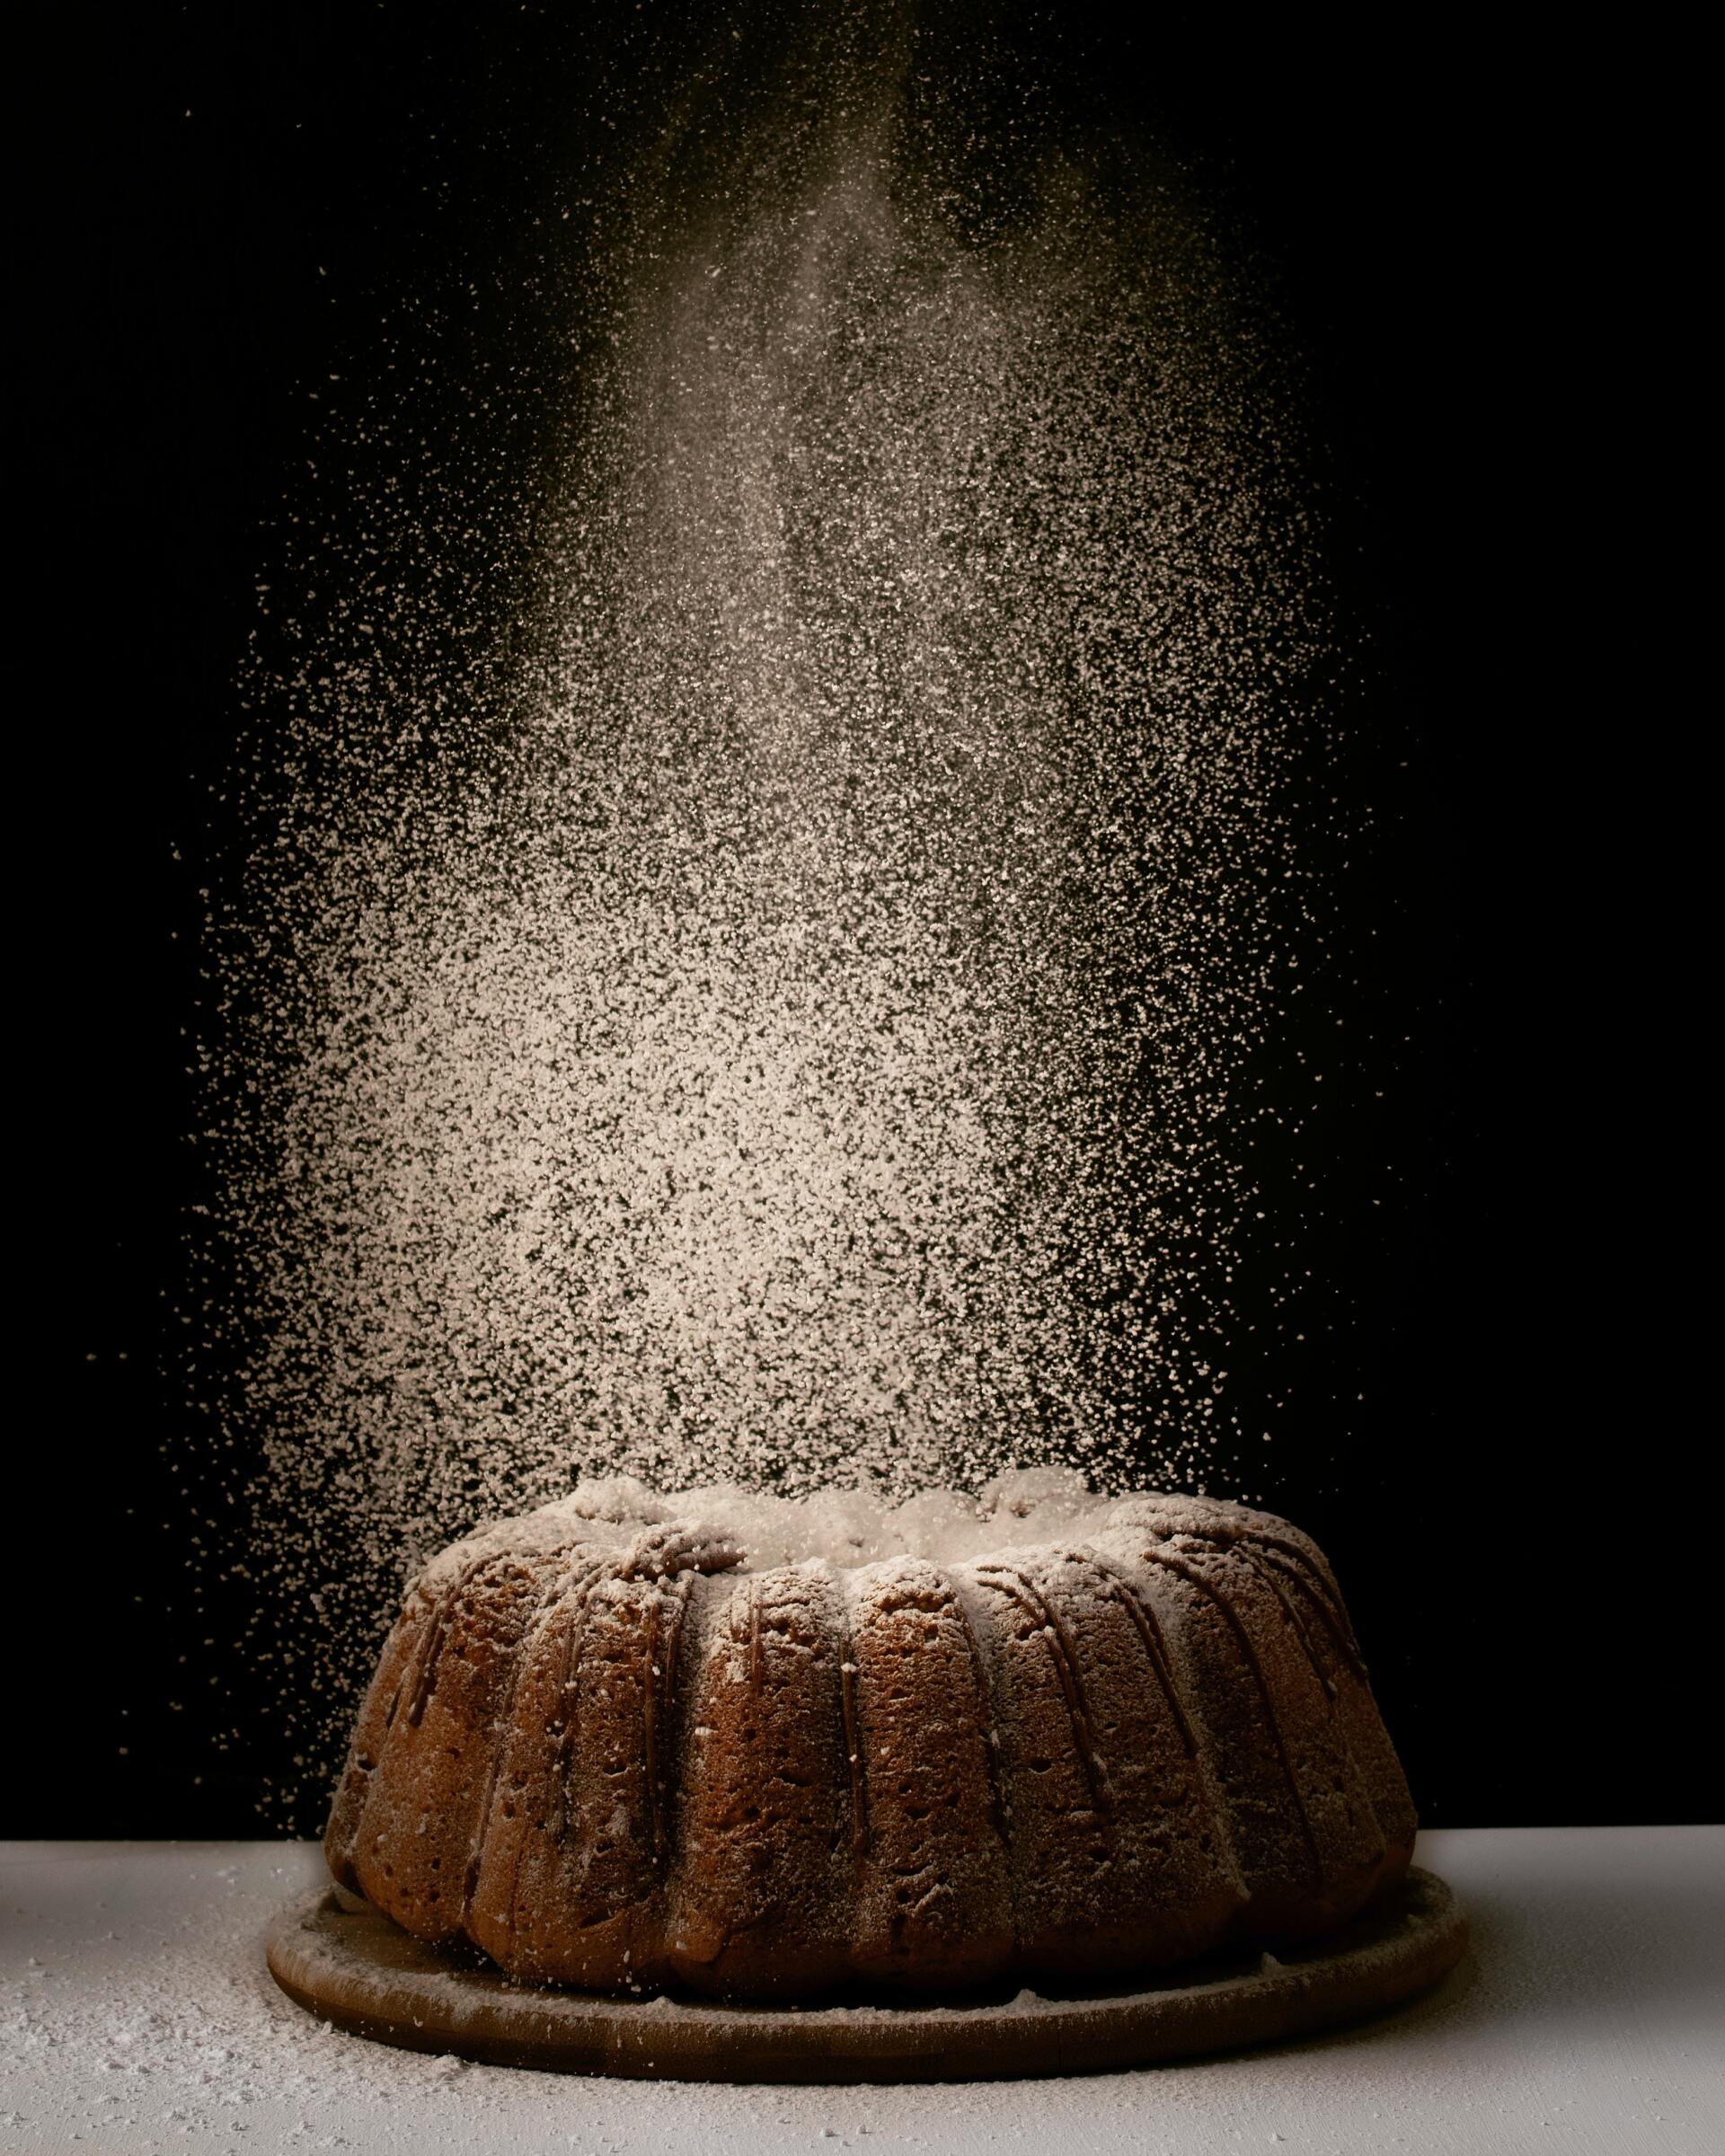 a good sugar coated cake with history - Congress Cake recipe at Bay Favors Food Blog